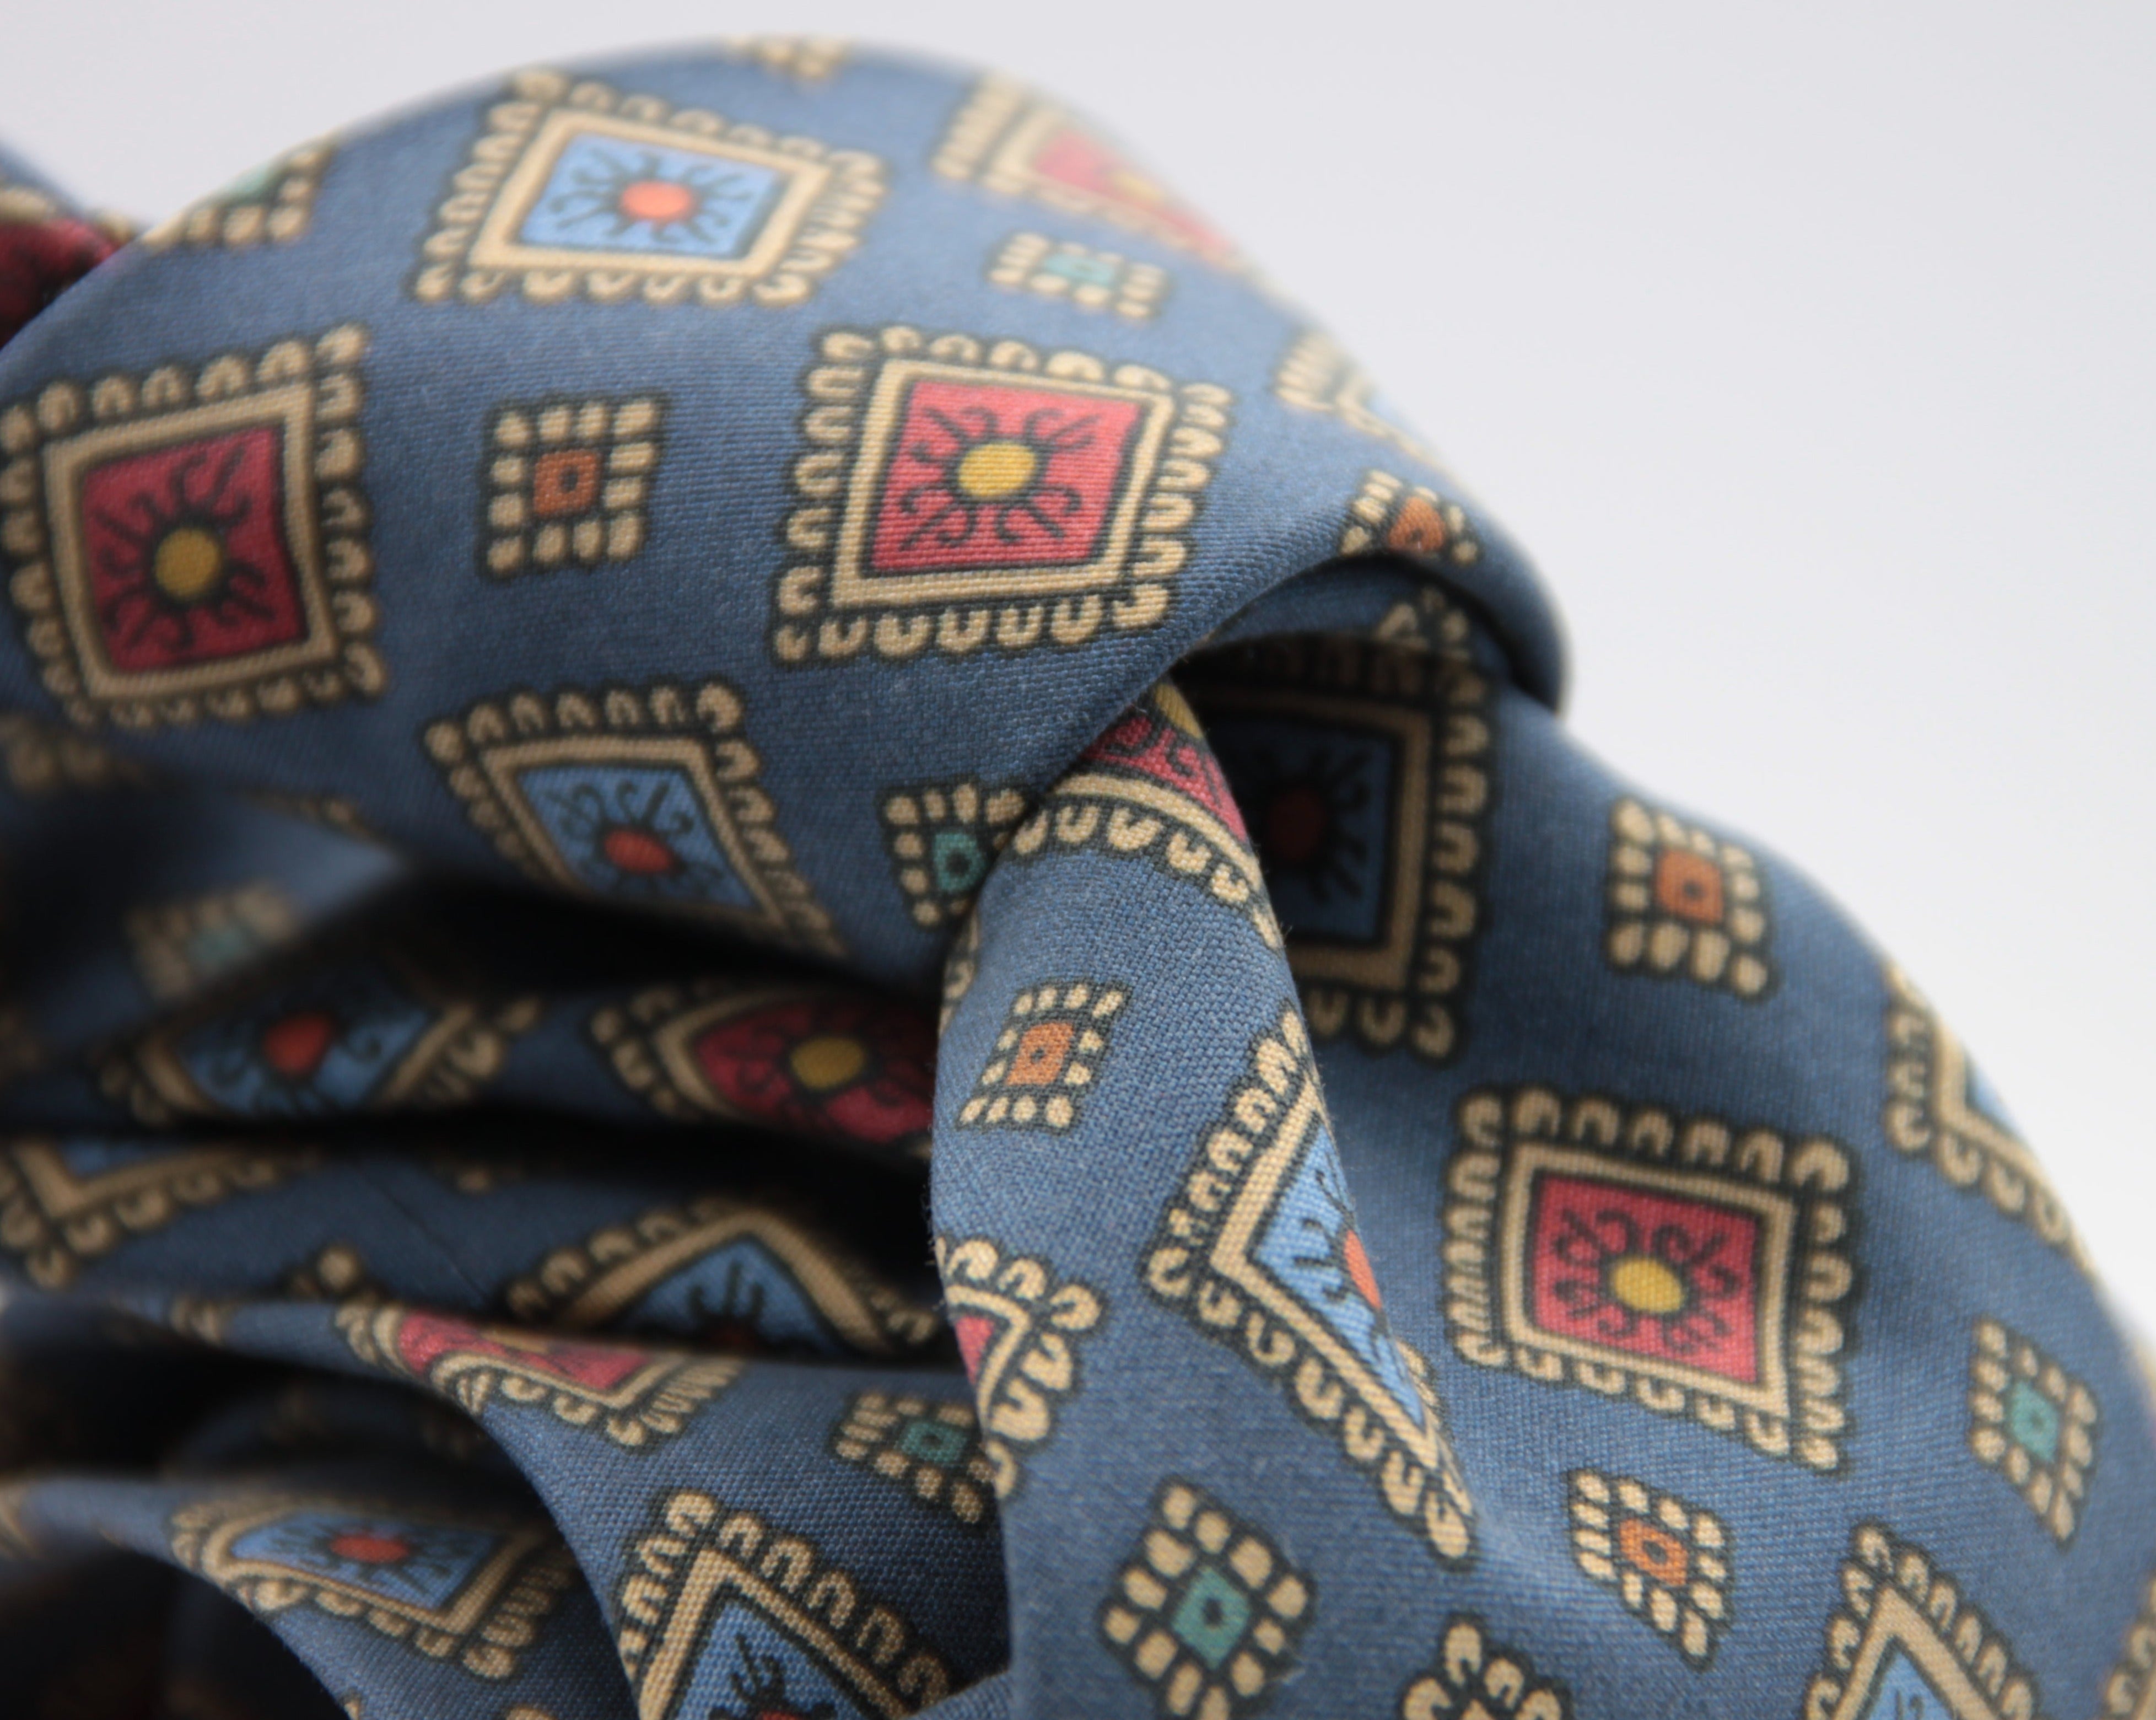 Cruciani & Bella 100% Printed Madder Silk  Italian fabric Unlined tie Denim Blue, Blue and Rust Handmade in Italy 8 cm x 150 cm #5952